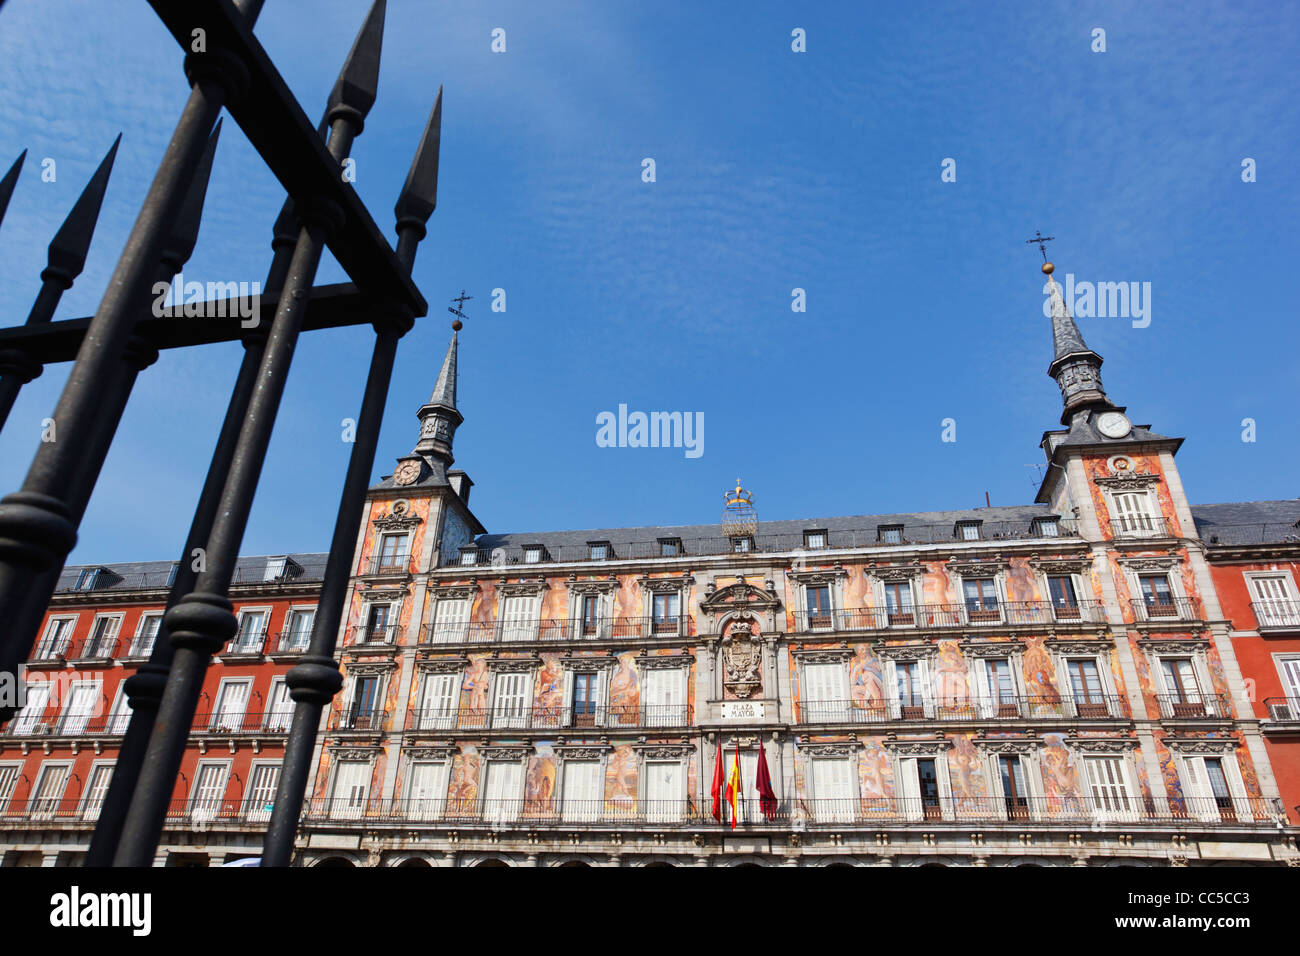 Madrid, Espagne. Plaza Mayor. Murales sur façade. Banque D'Images